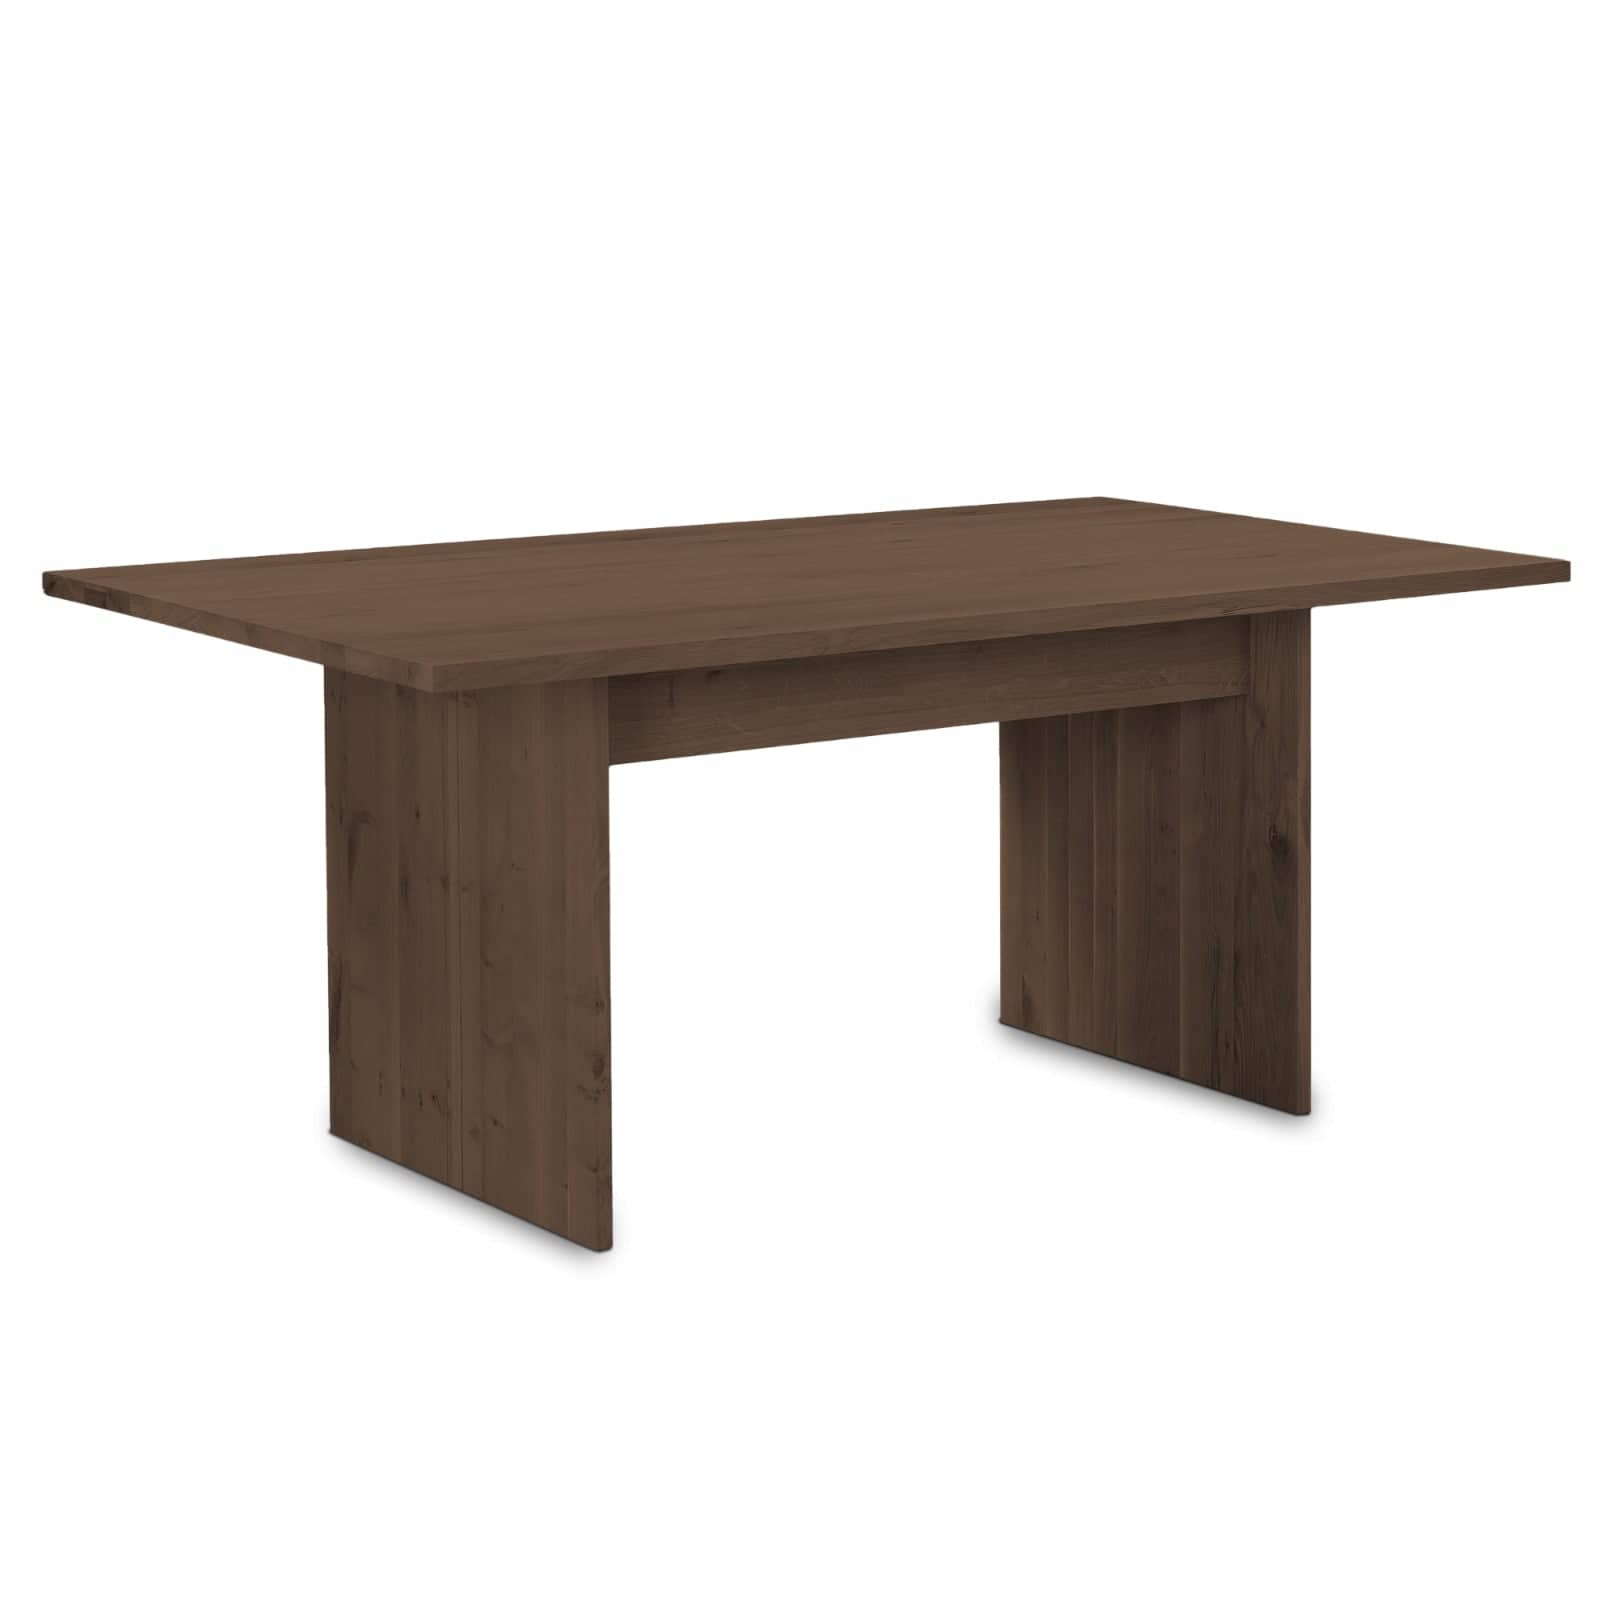 Buy Notch Dining Table 180cm - Walnut by RJ Living online - RJ Living